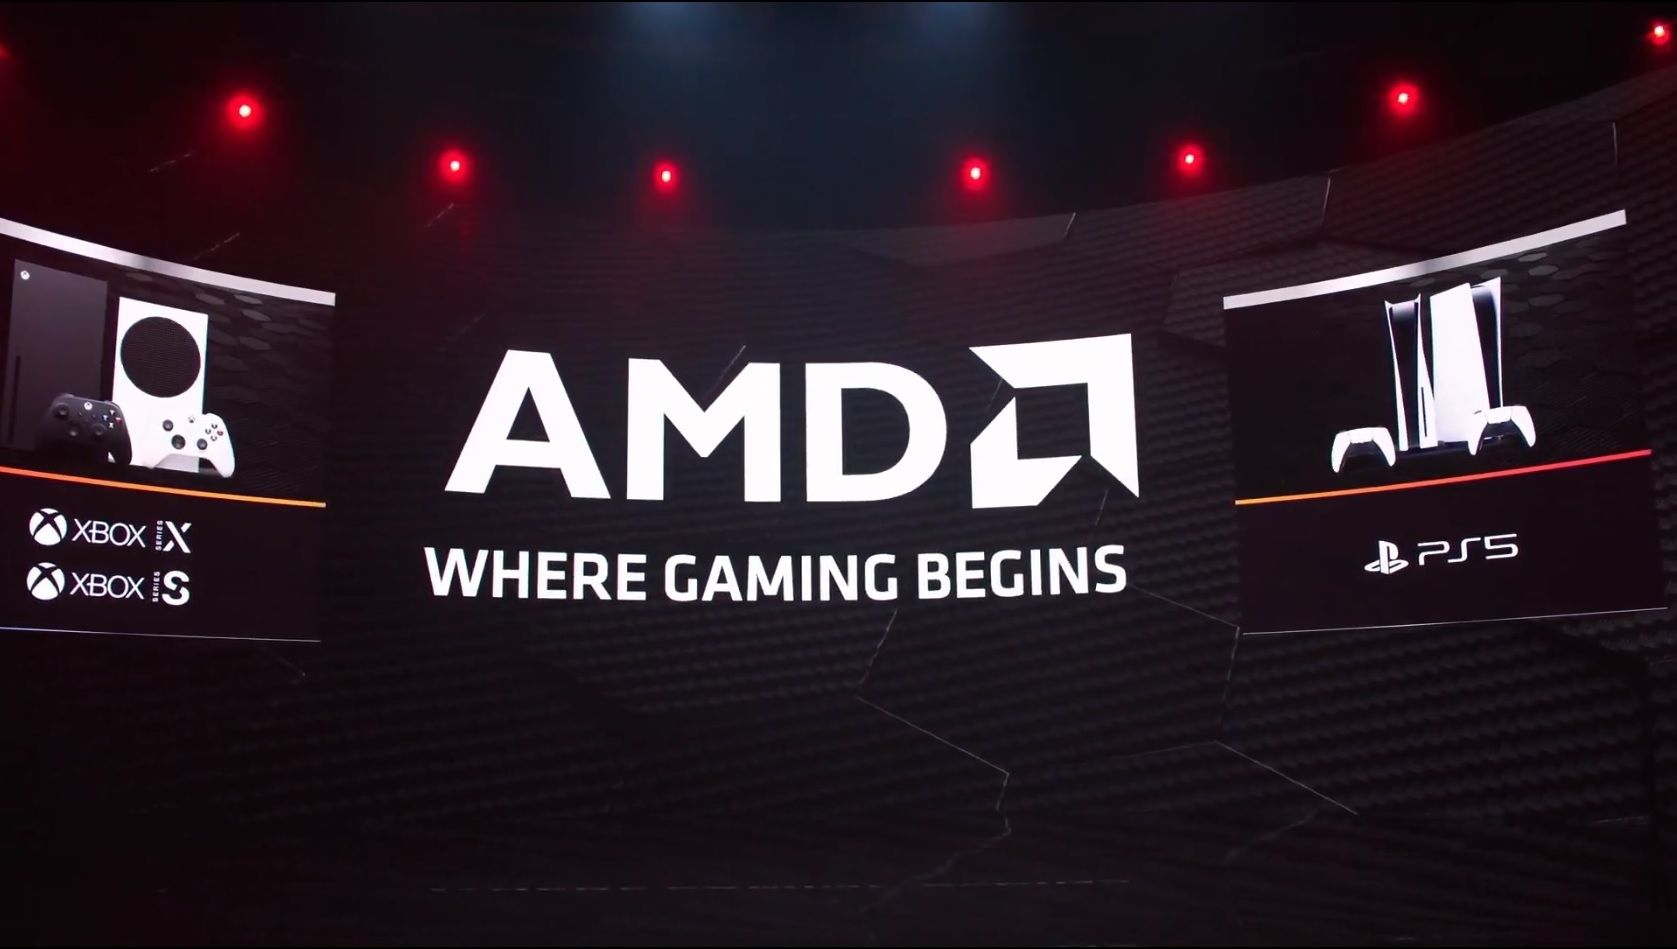 AMD RDNA 2